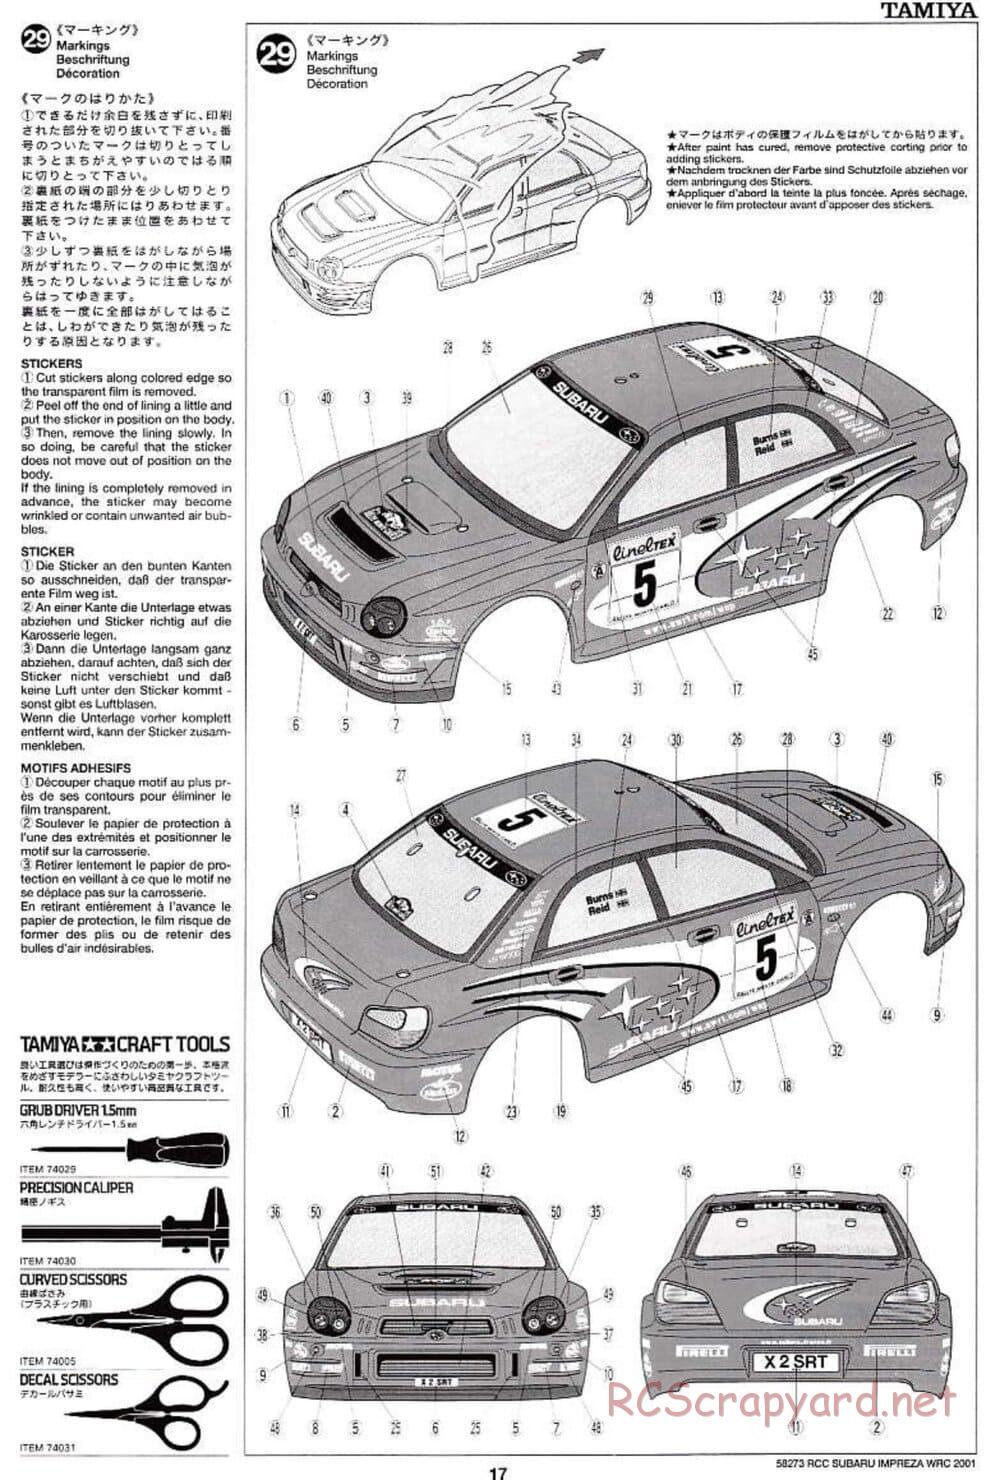 Tamiya - Subaru Impreza WRC 2001 - TL-01 Chassis - Manual - Page 17